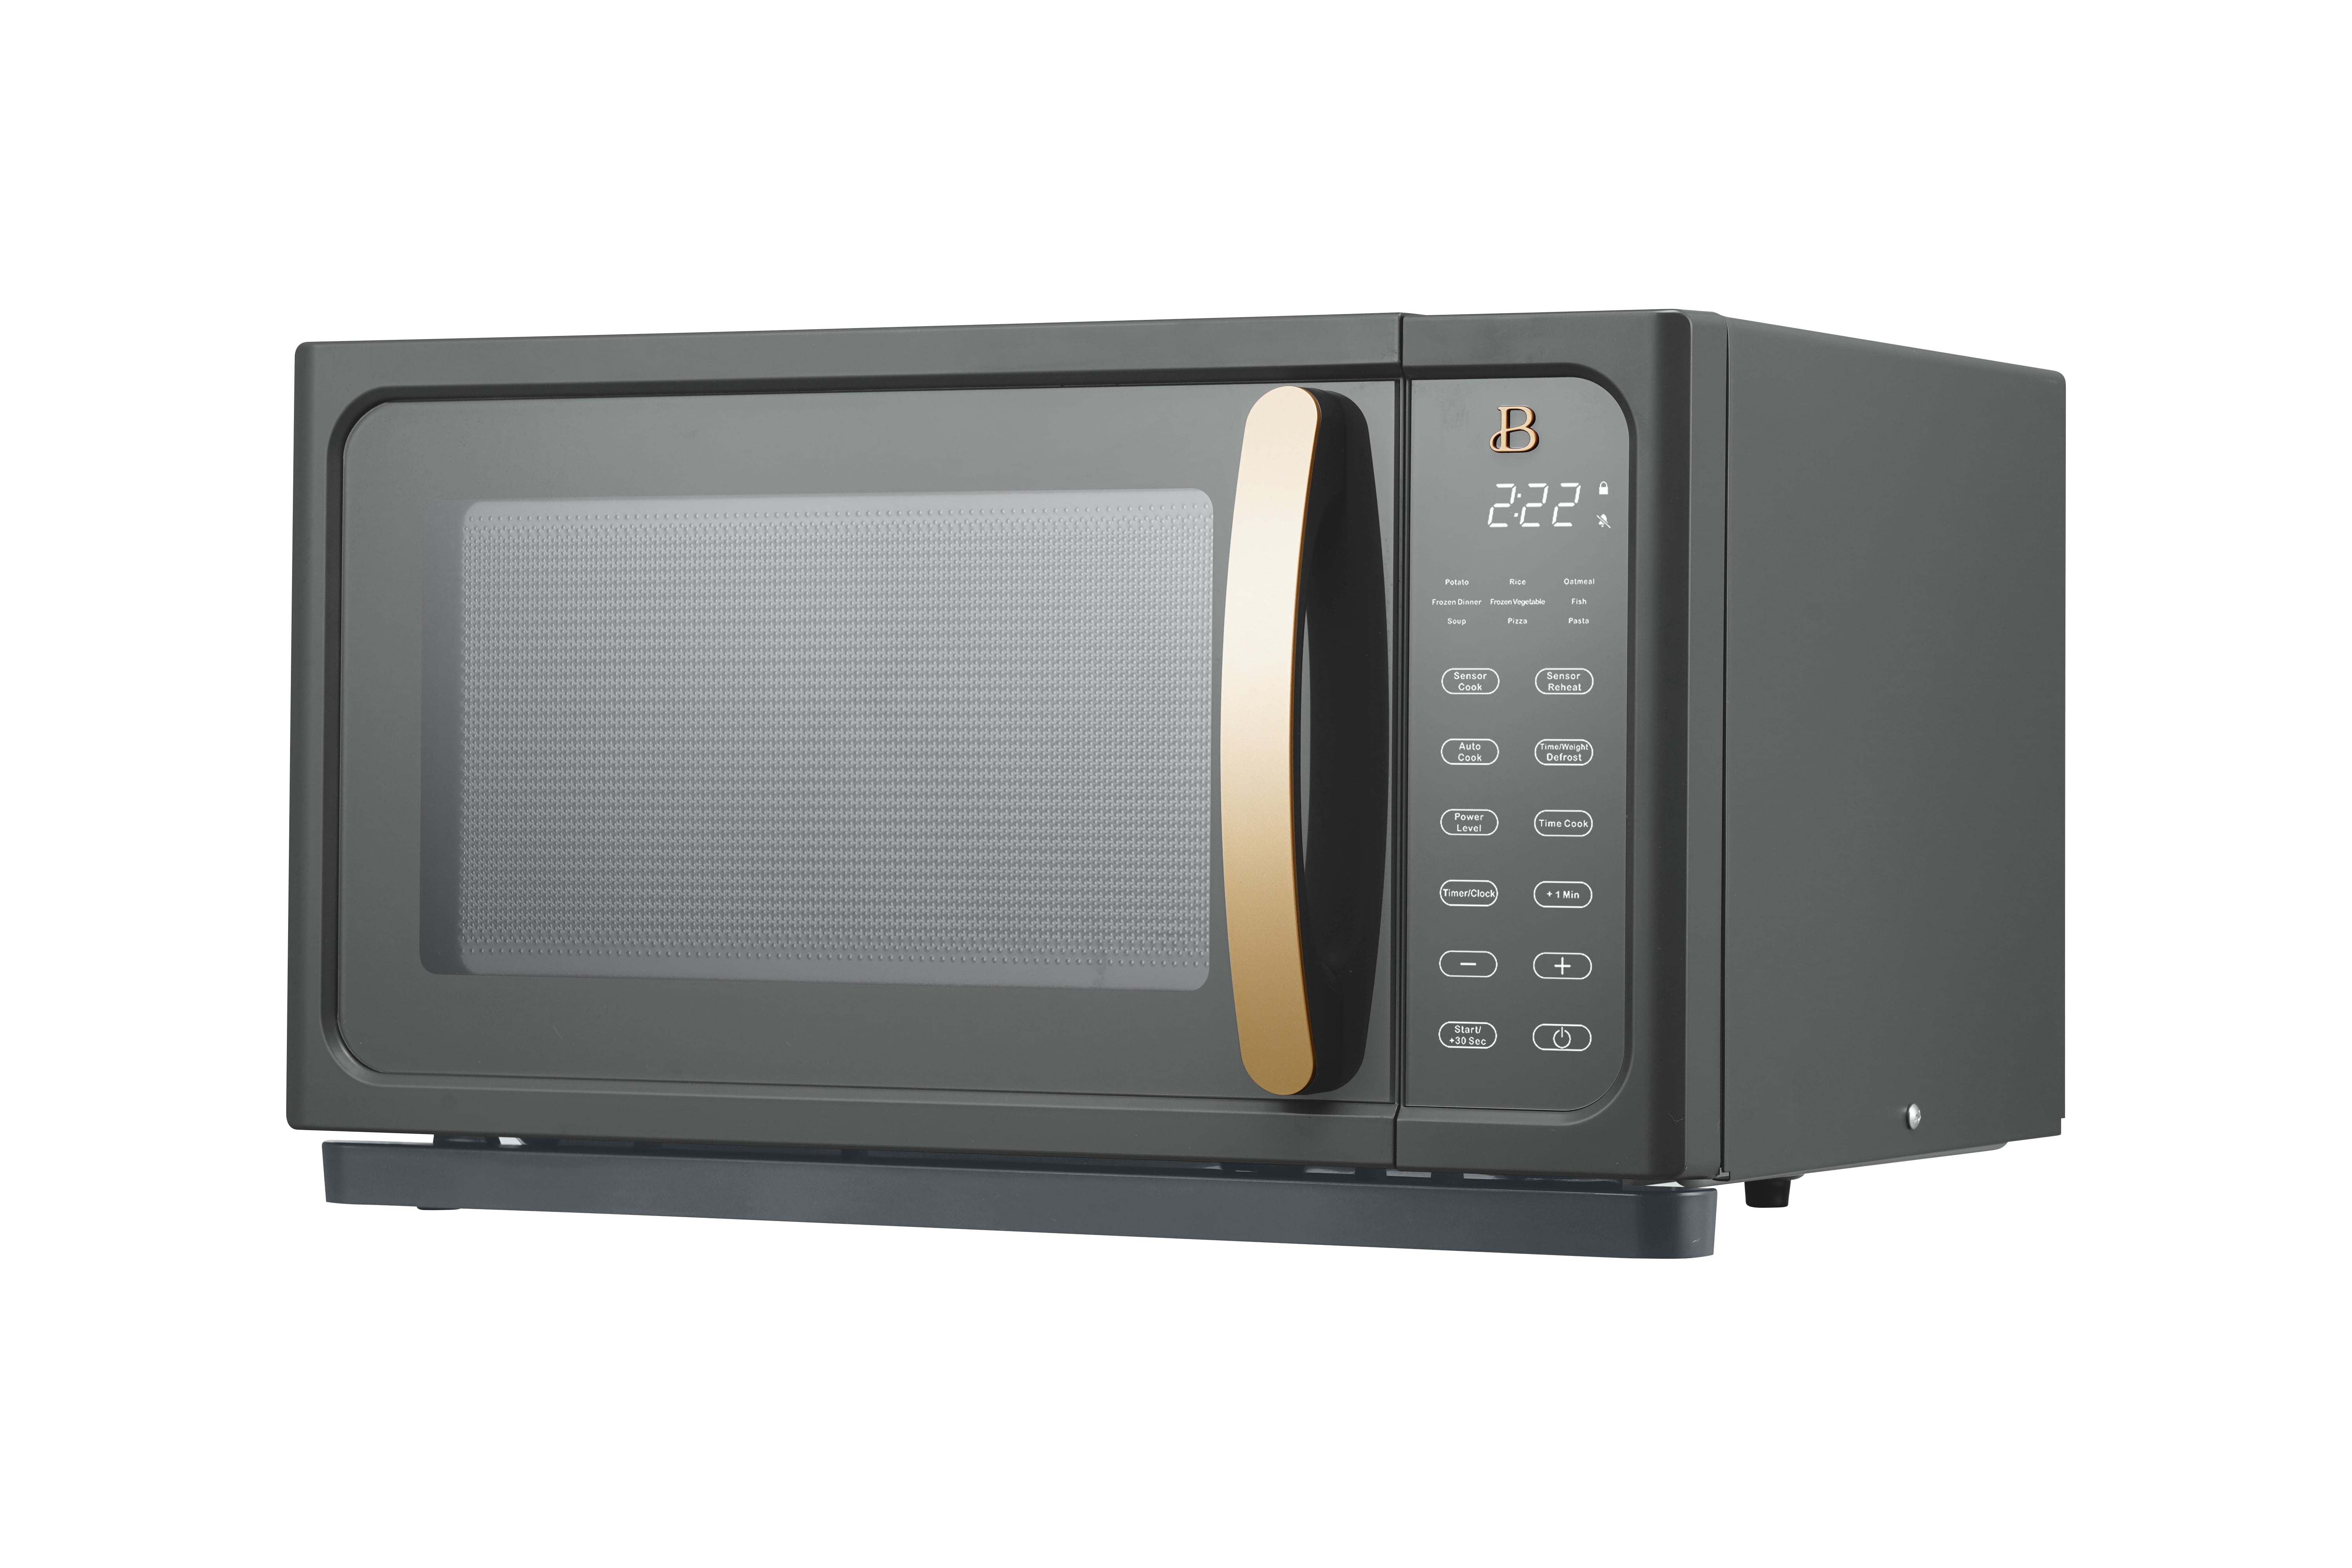  Beautiful 1.1 Cu ft 1000 Watt, Sensor Microwave Oven, Sage  Green by Drew Barrymore : Everything Else